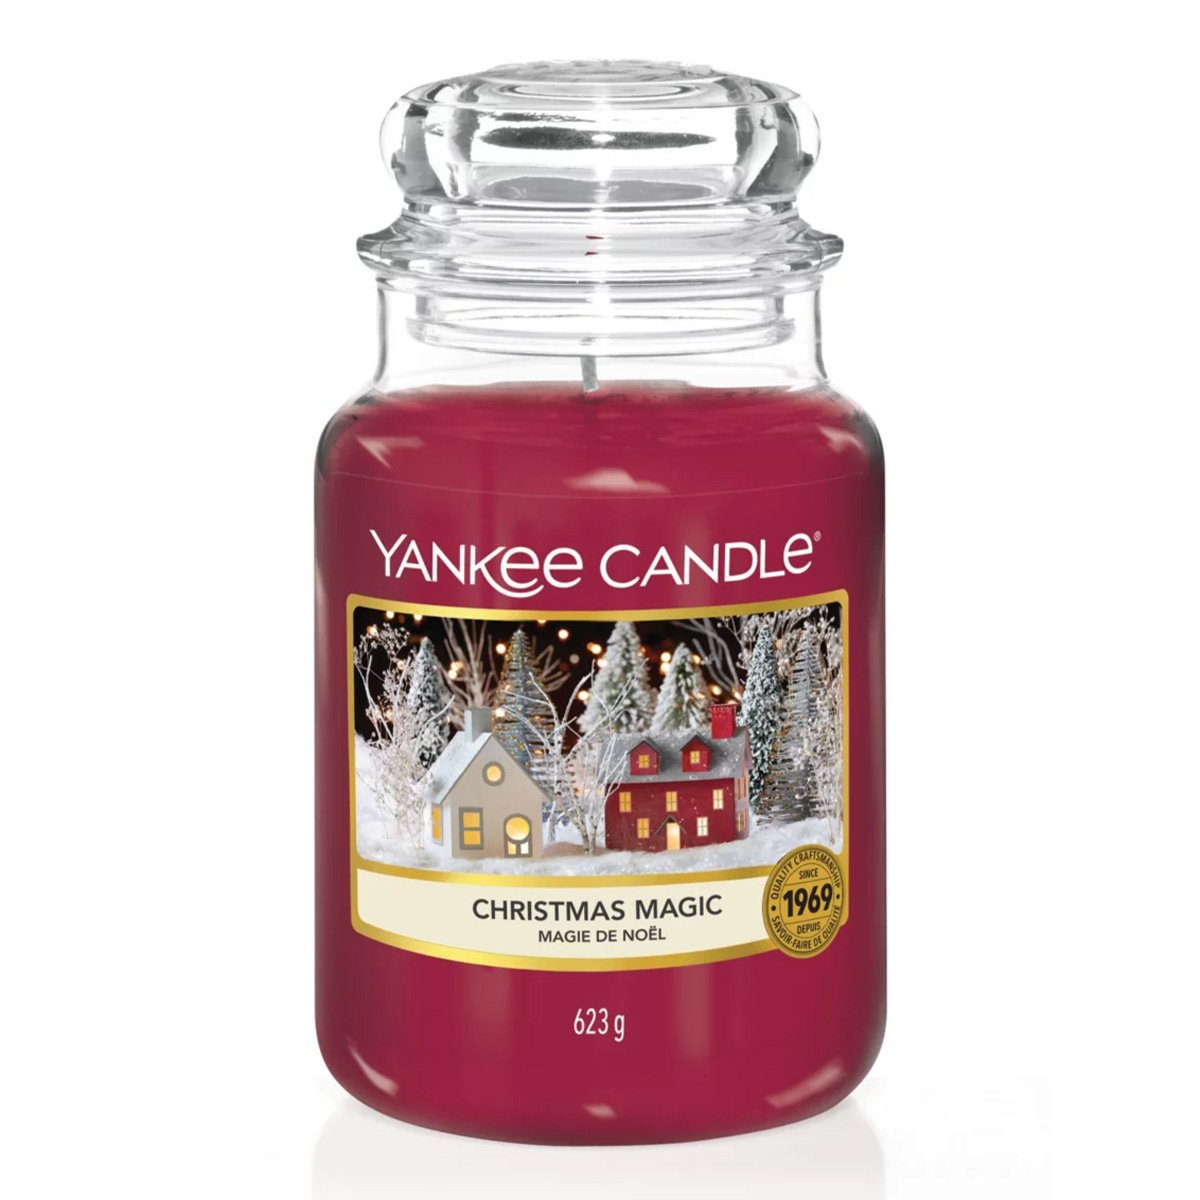 Yankee Candle Christmas Magic Giara Grande - Myho